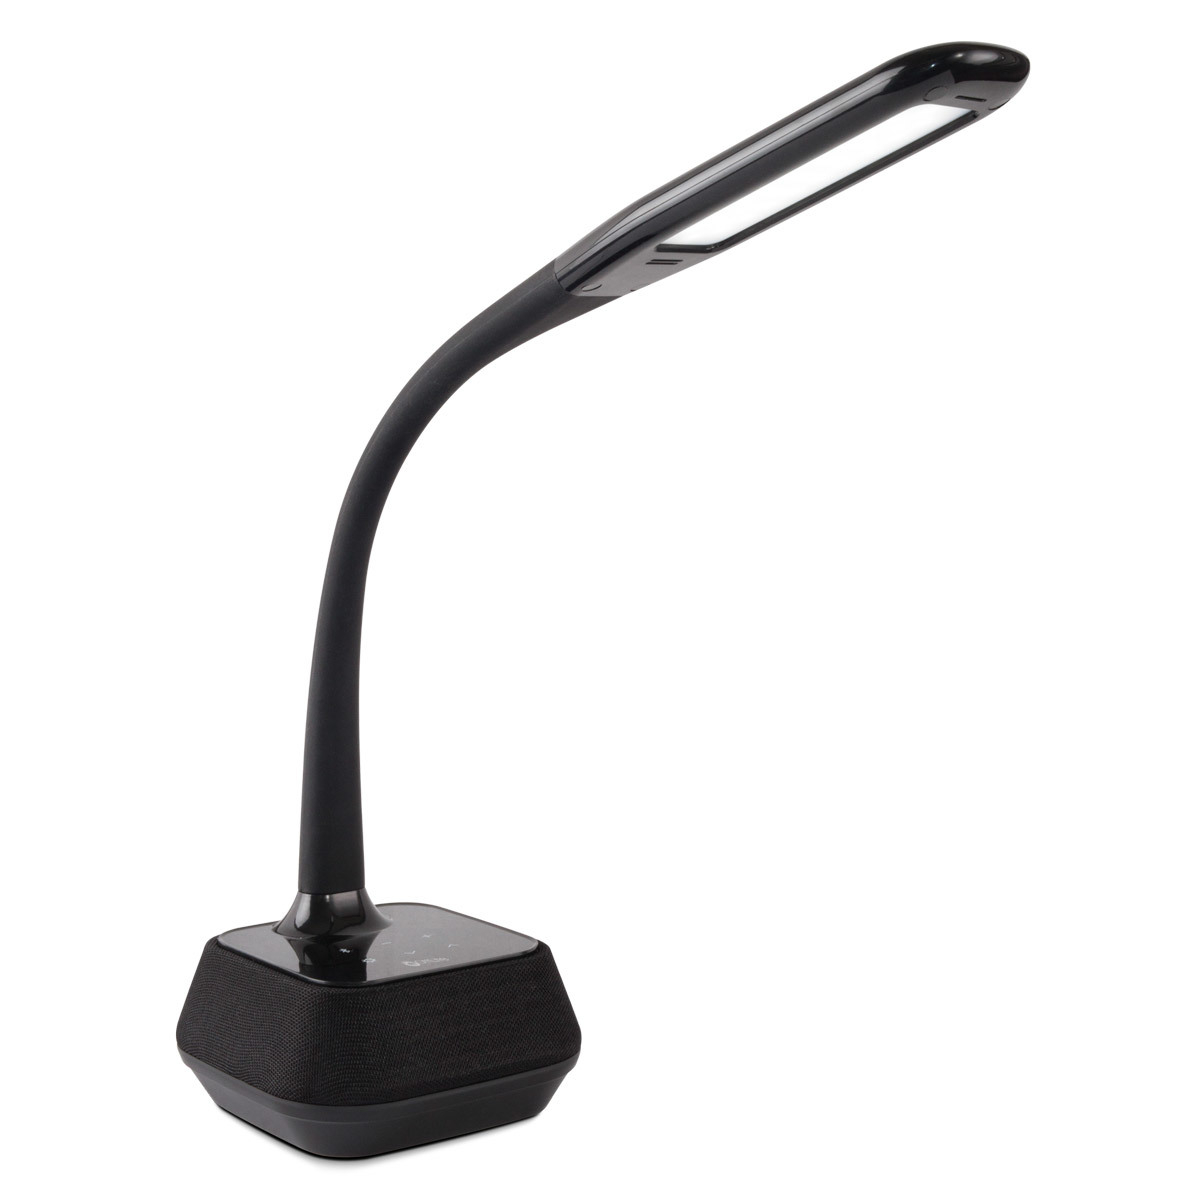 Ottlite Led Bluetooth Speaker Desk Lamp In Black 34 99 At Costco